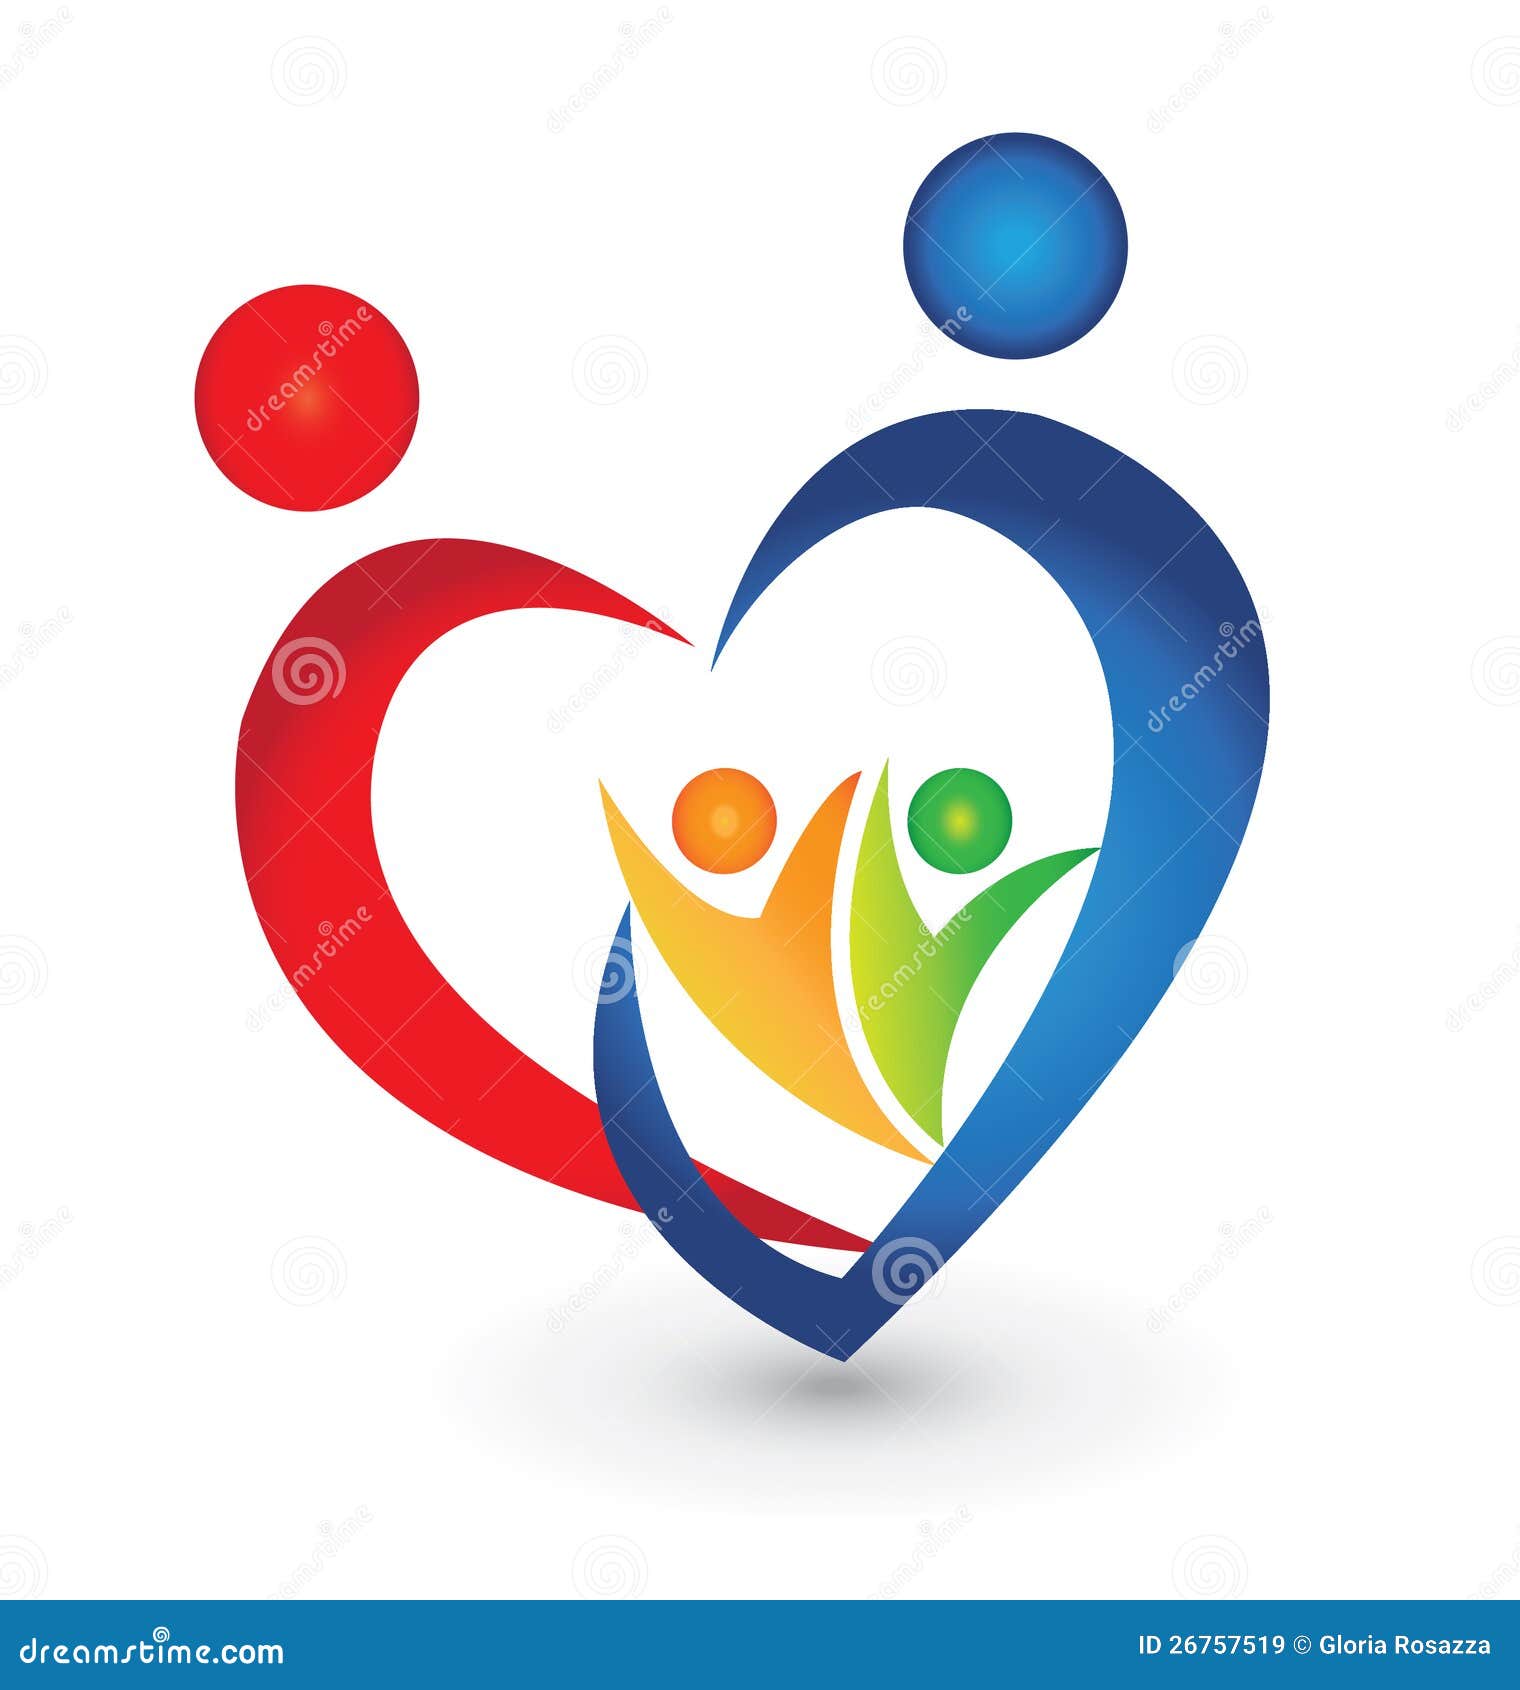 Family Union In A Heart Shape Logo Stock Vector Illustration Of